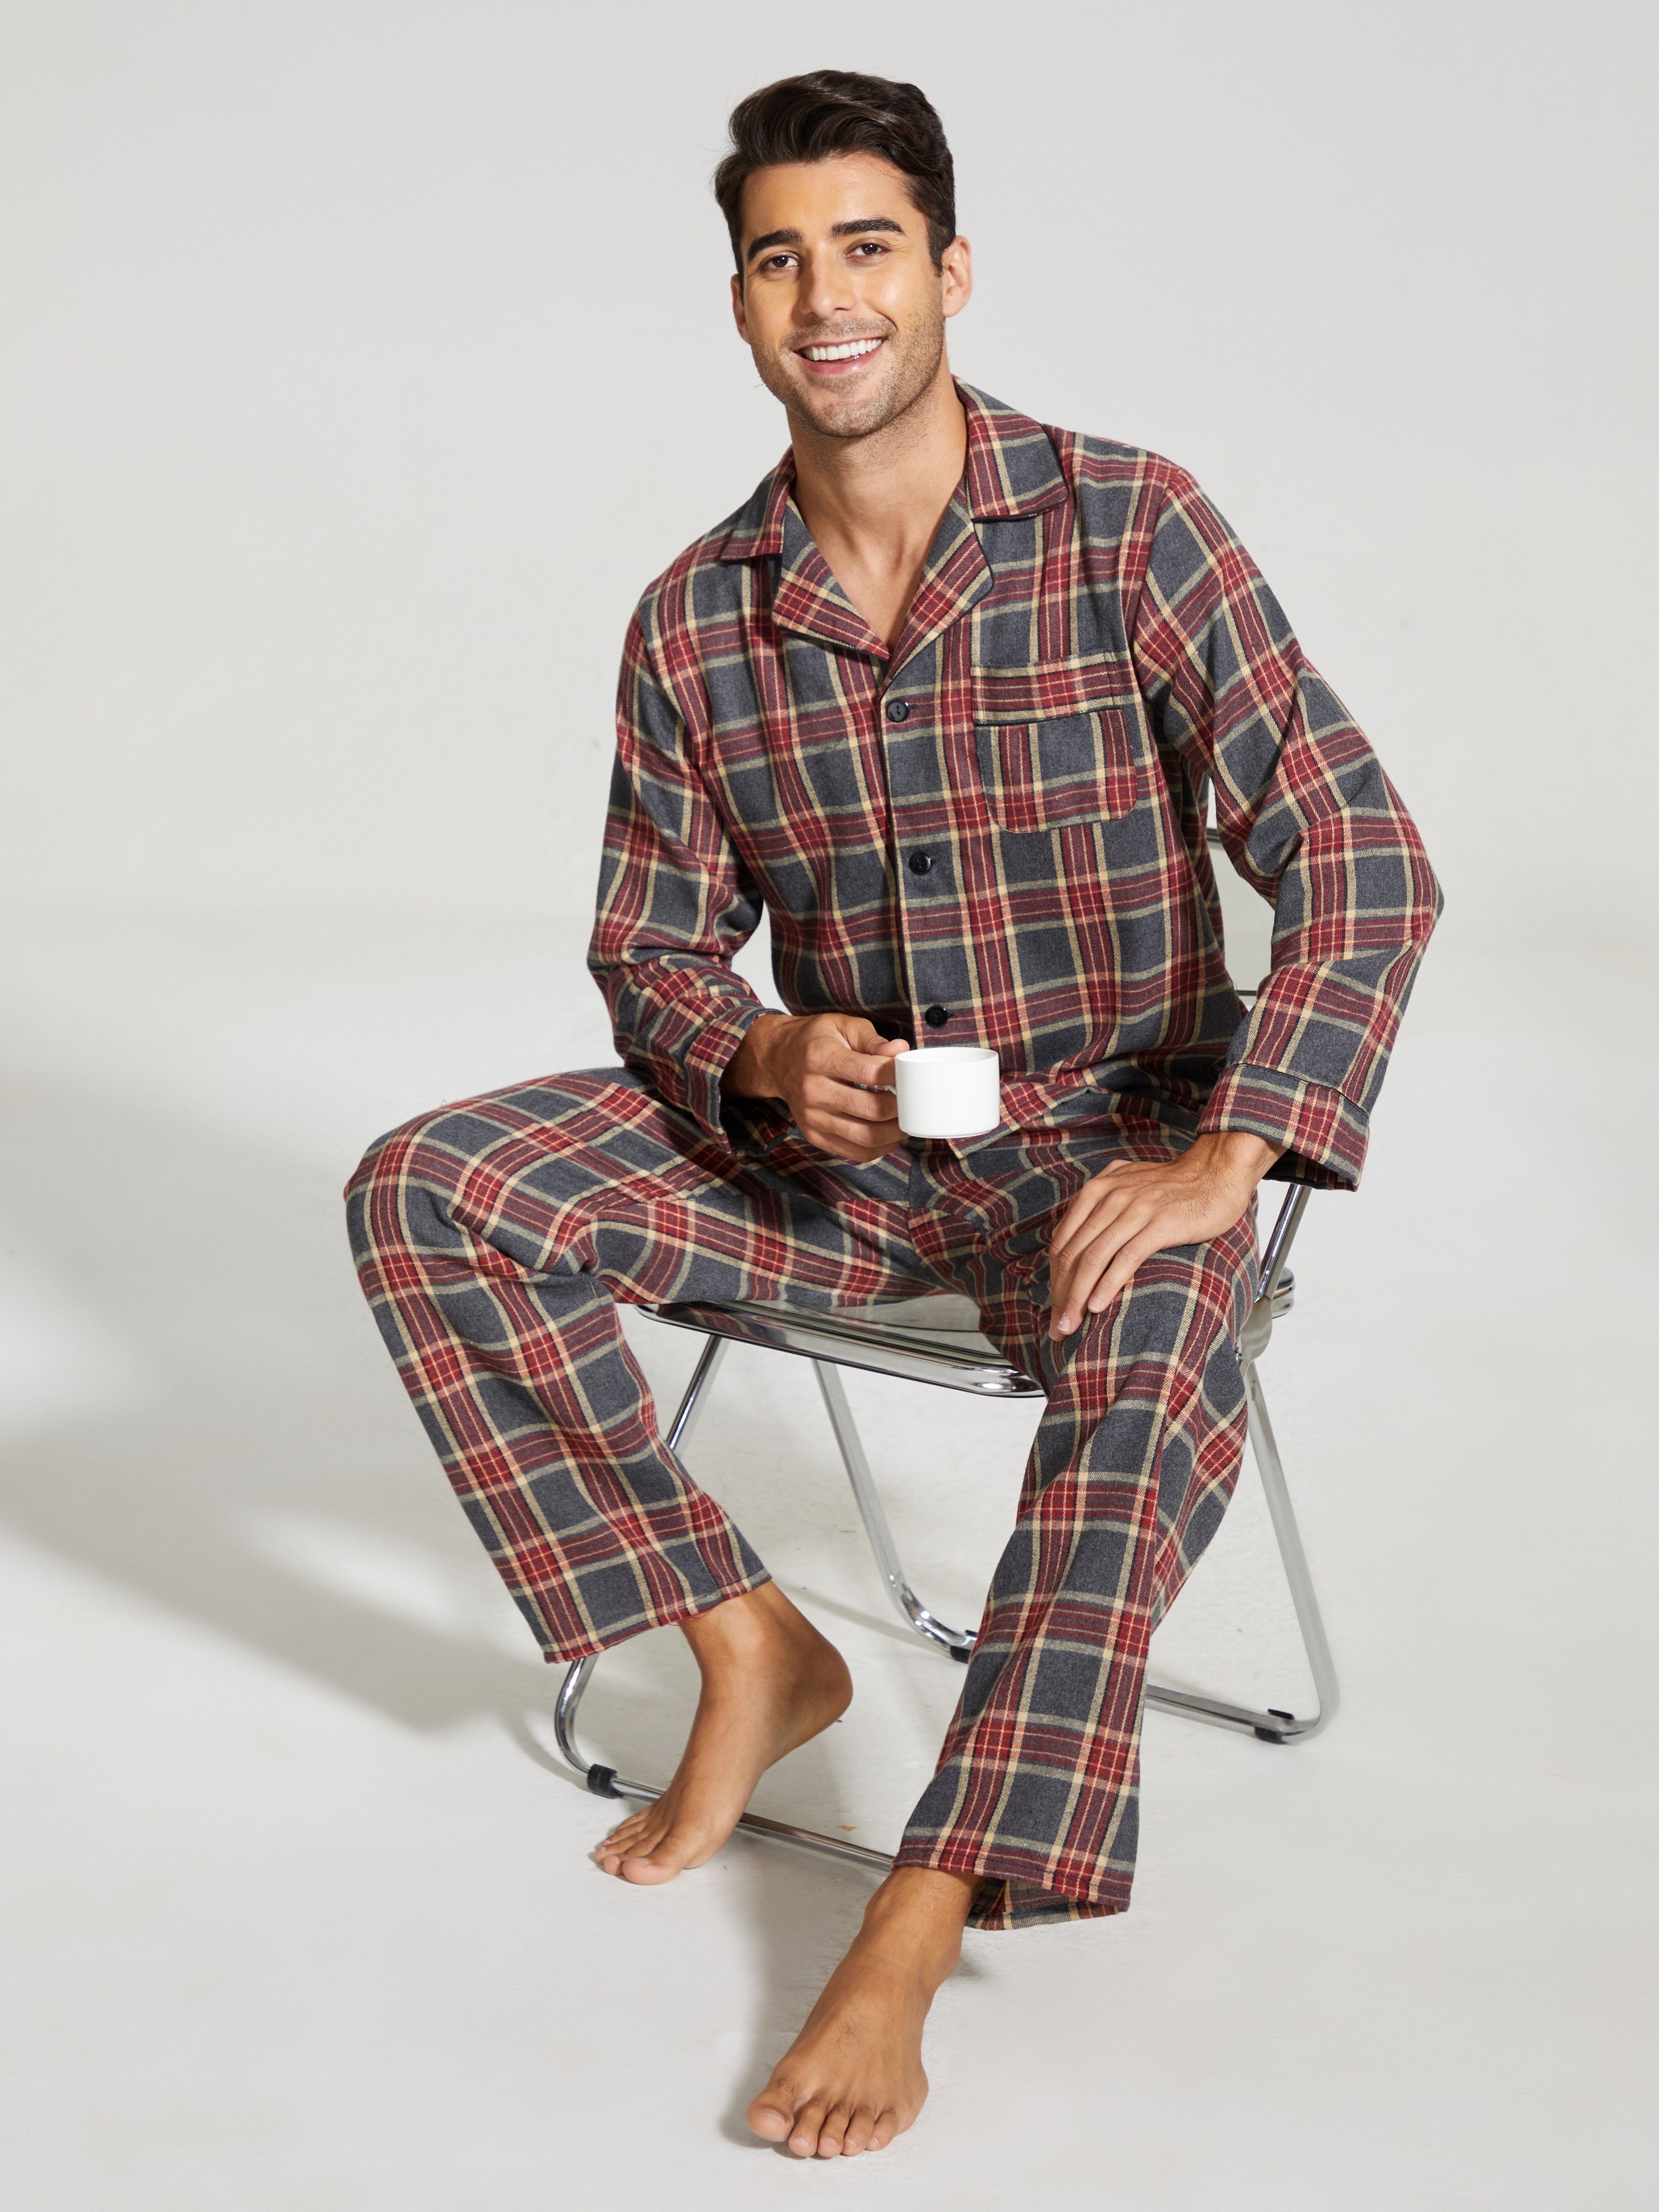 Women’s Pajama Sets Soft Sleepwear Long Sleeve Top with Long Pants Causal  Pj Button Down Lounge Sleep Set with Pocket